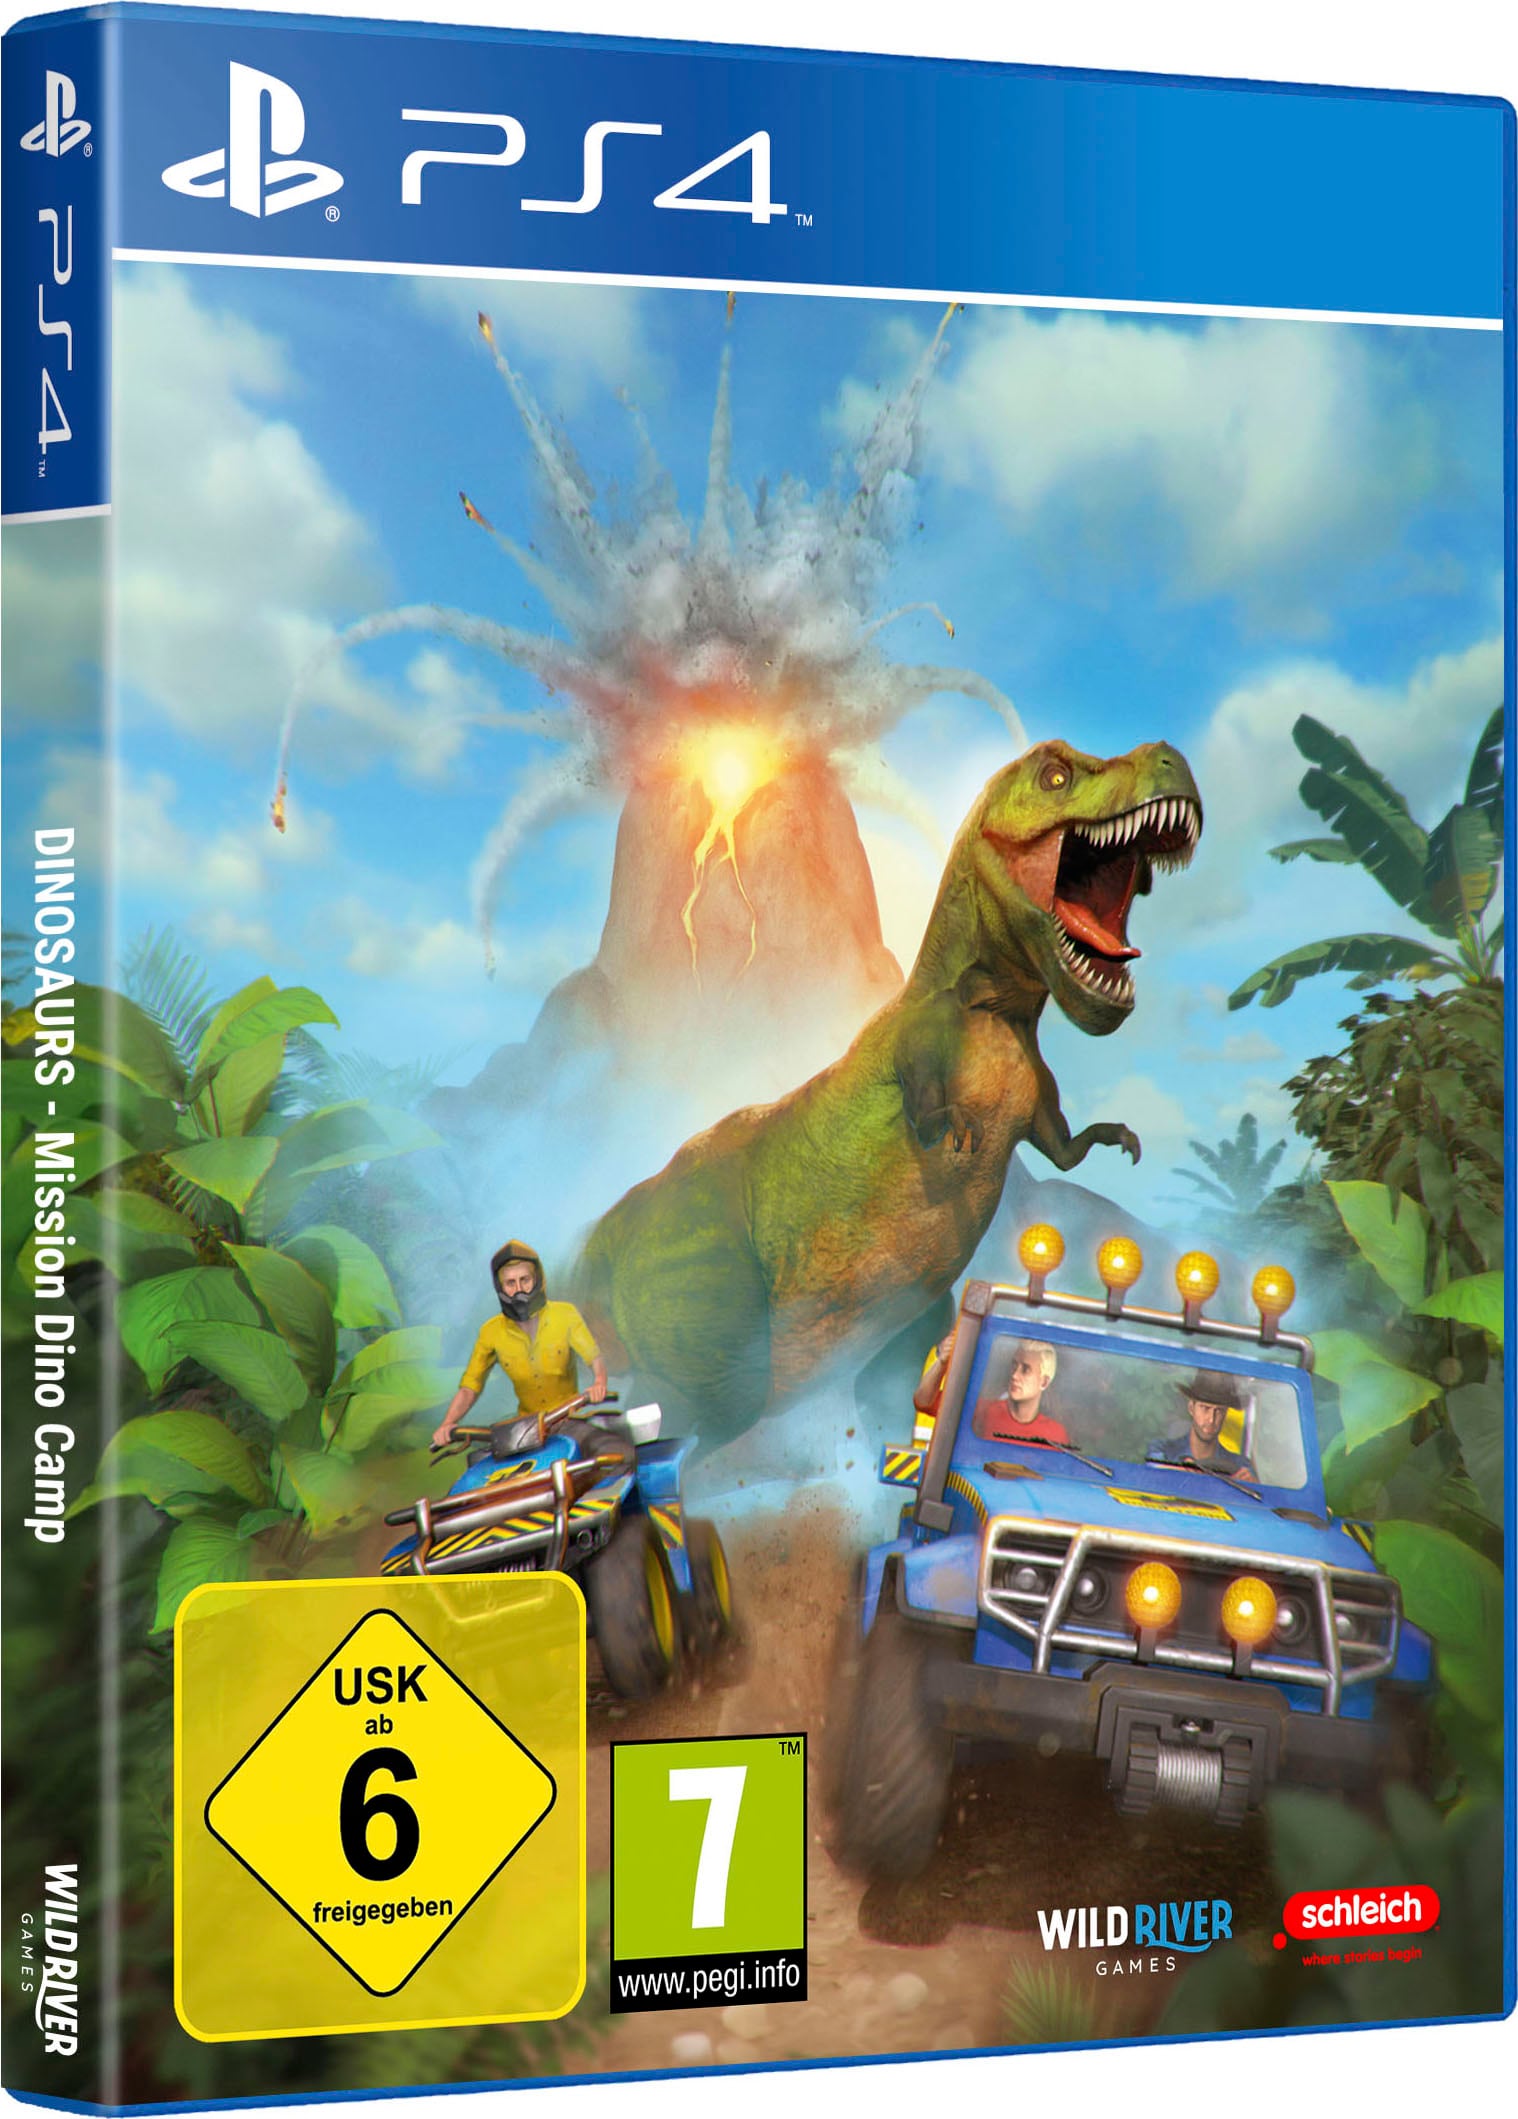 Software | Dino »Dinosaurs: PlayStation Camp«, 4 Pyramide Spielesoftware BAUR Mission